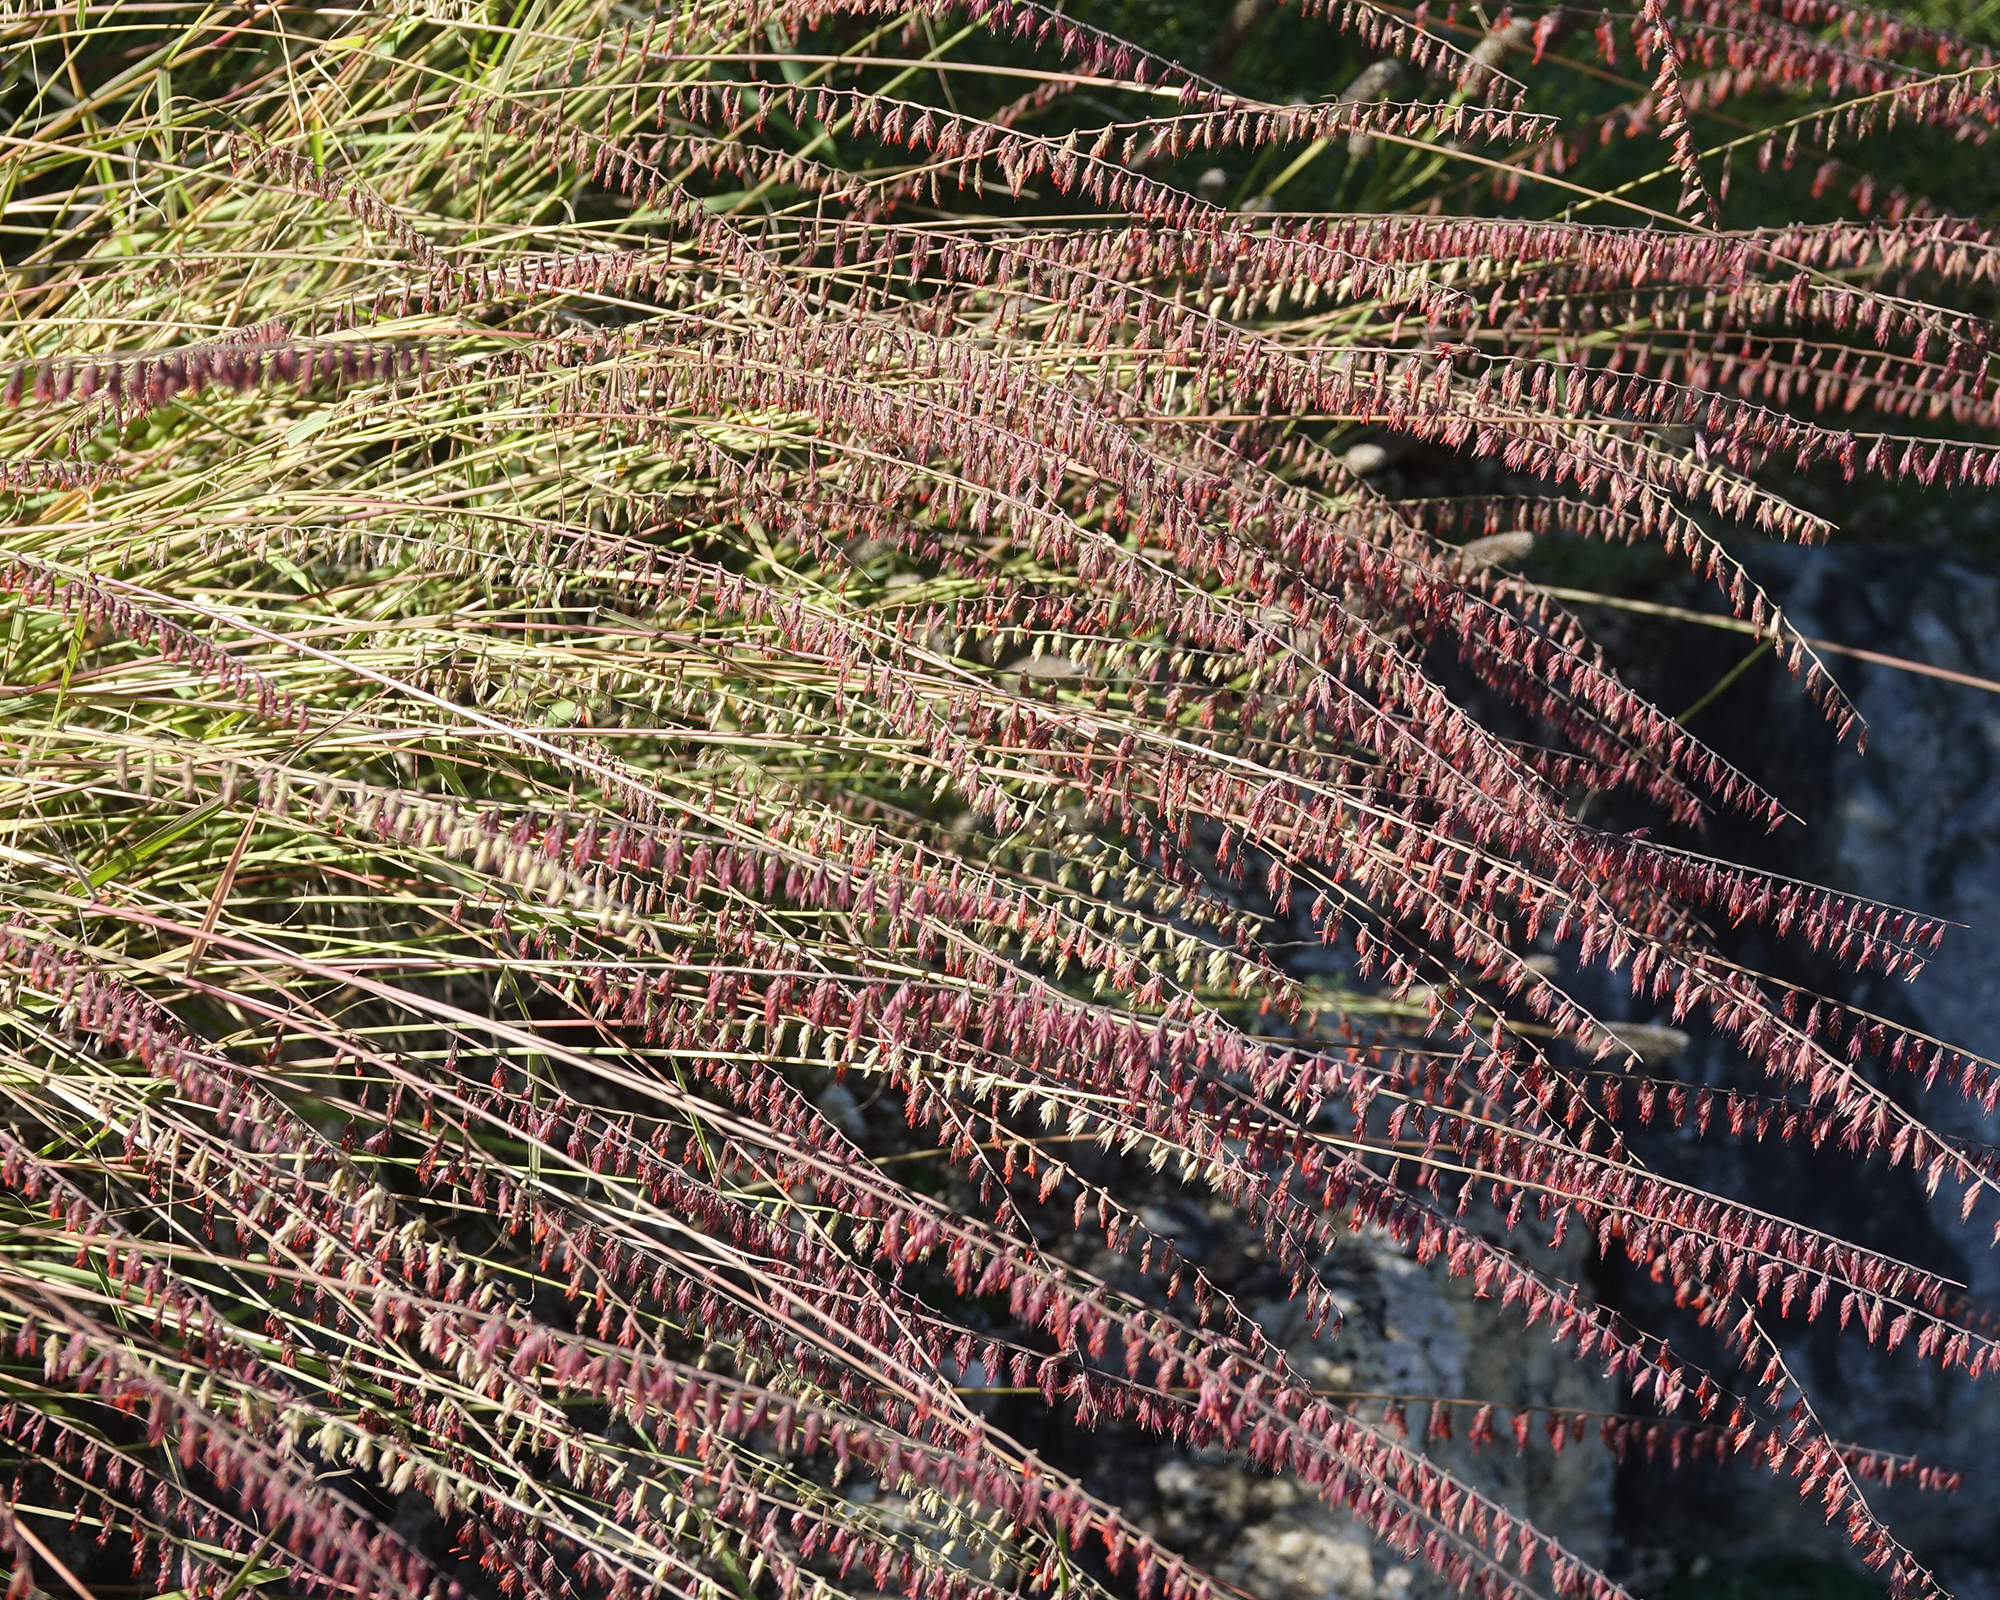 Sideoats grama ornamental grass